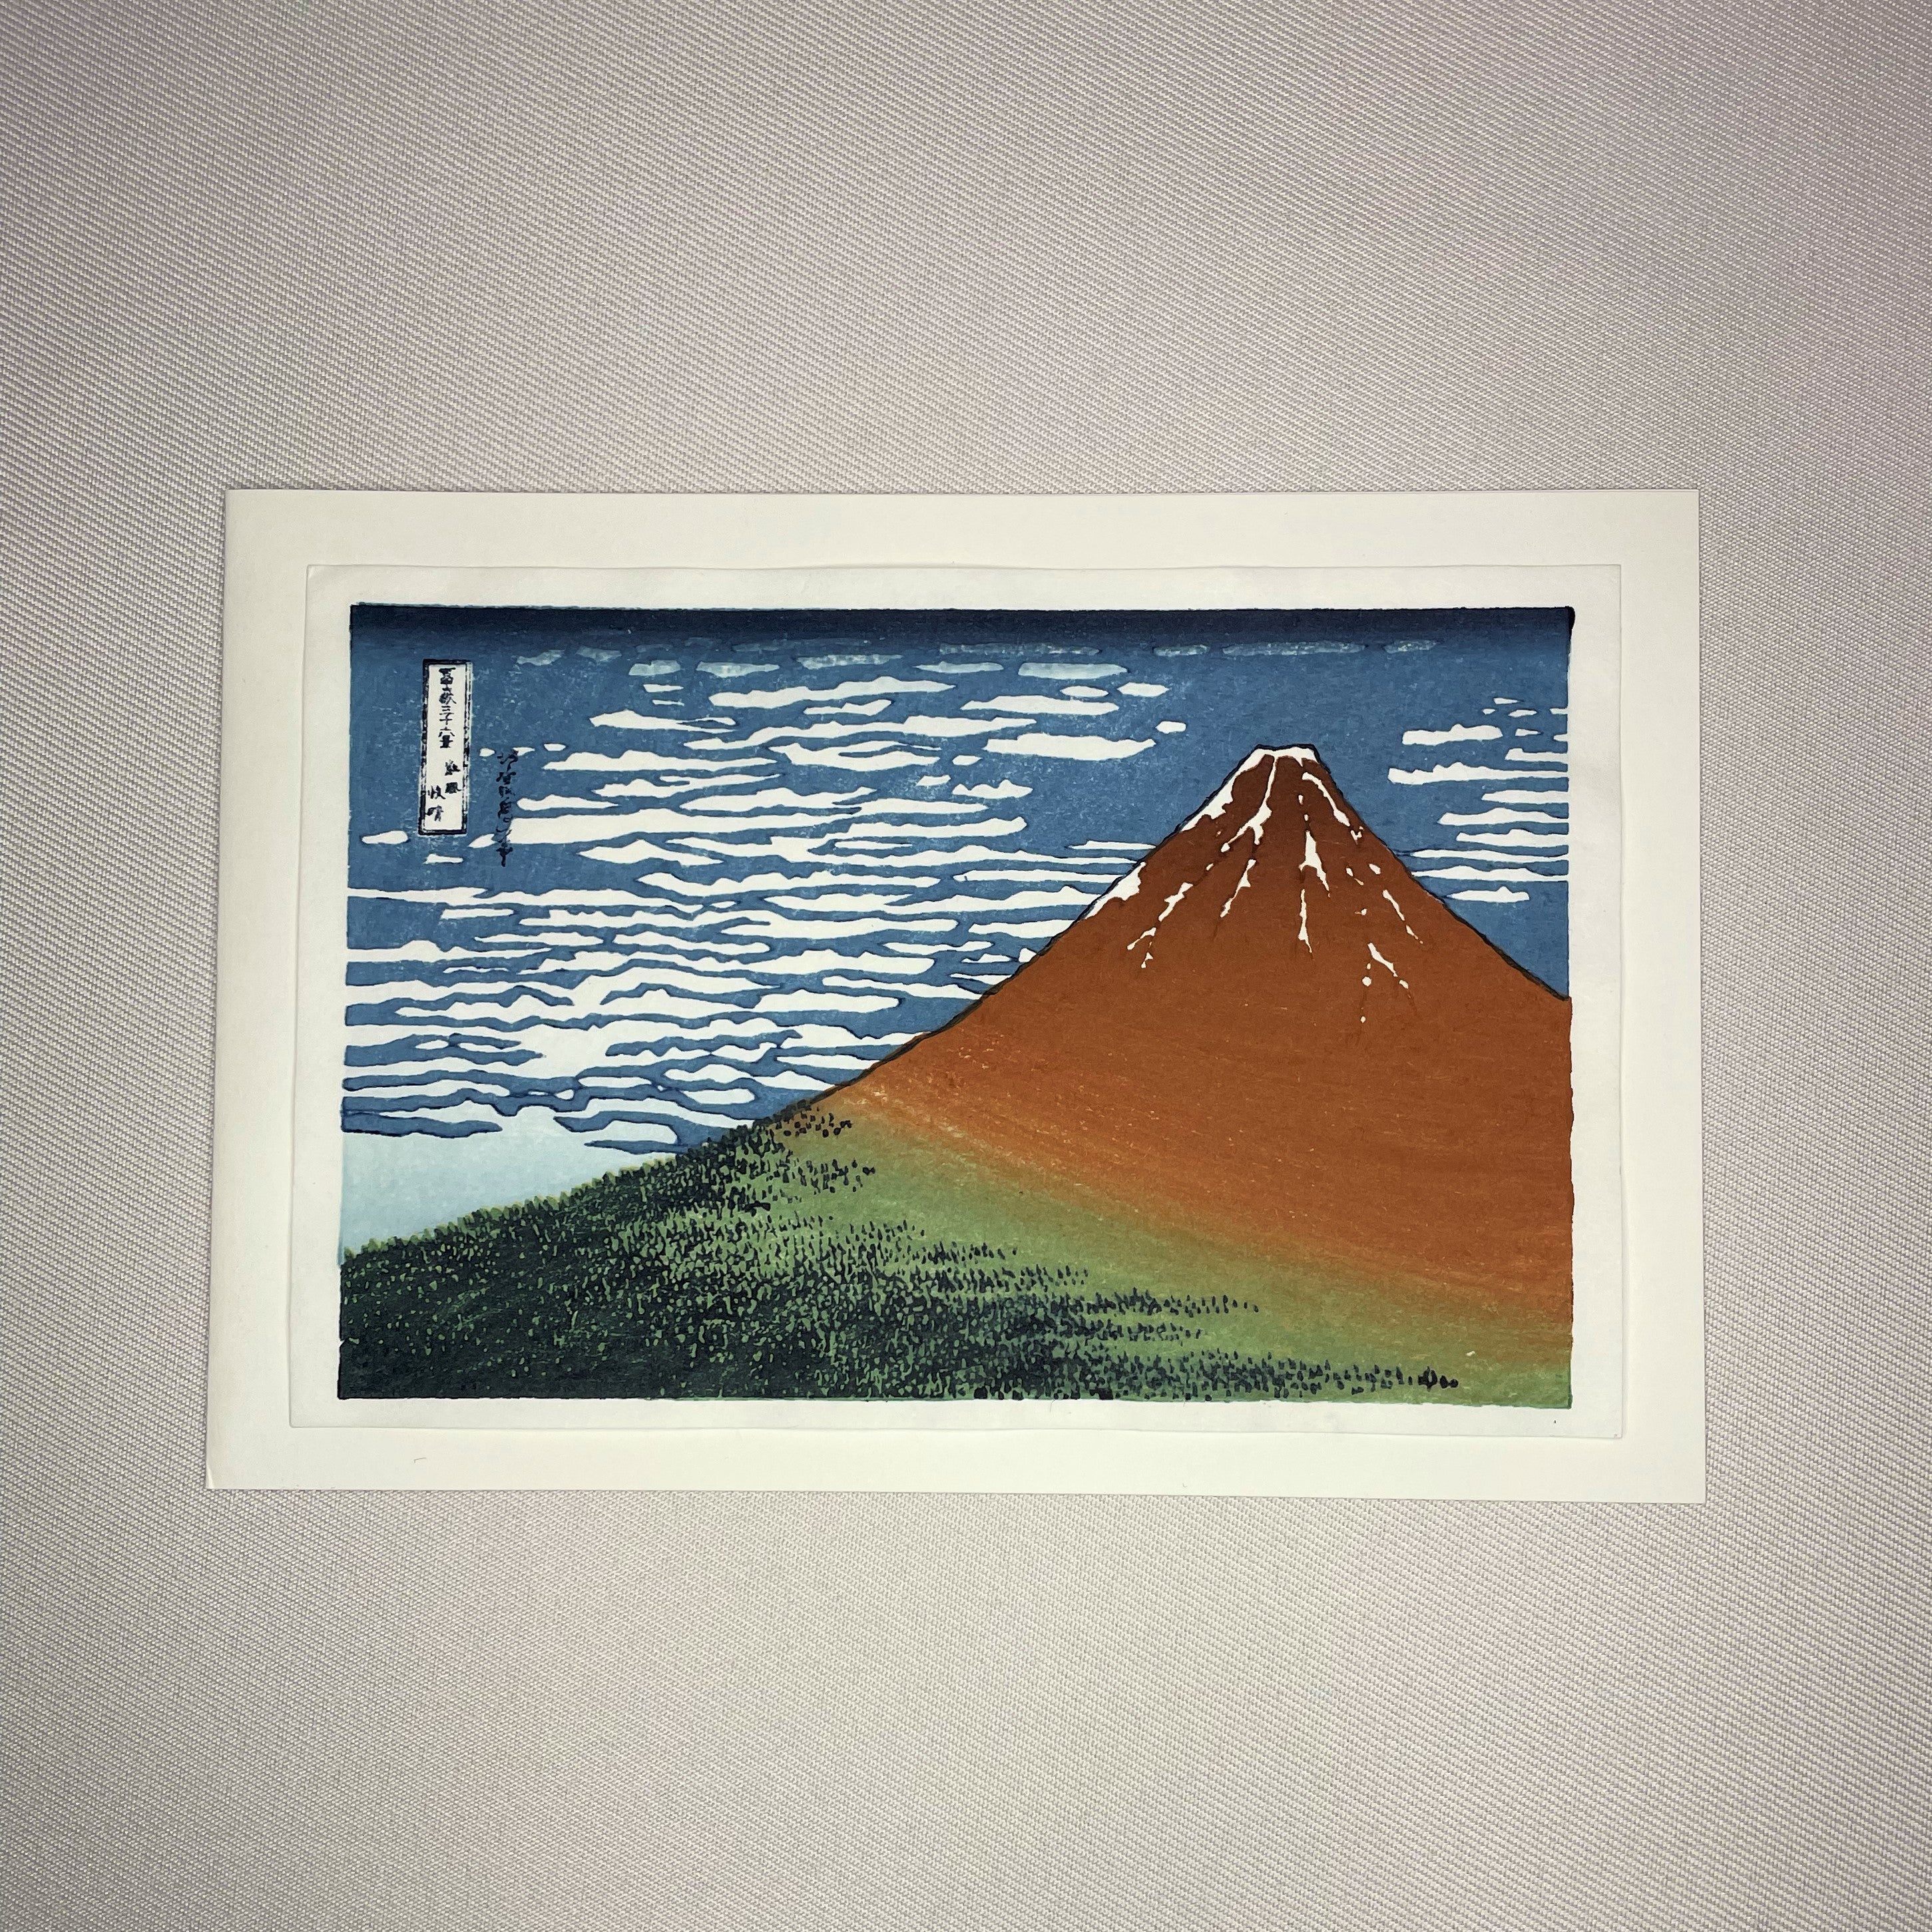 Woodblock Print Post Card (The Red Mt. Fuji)